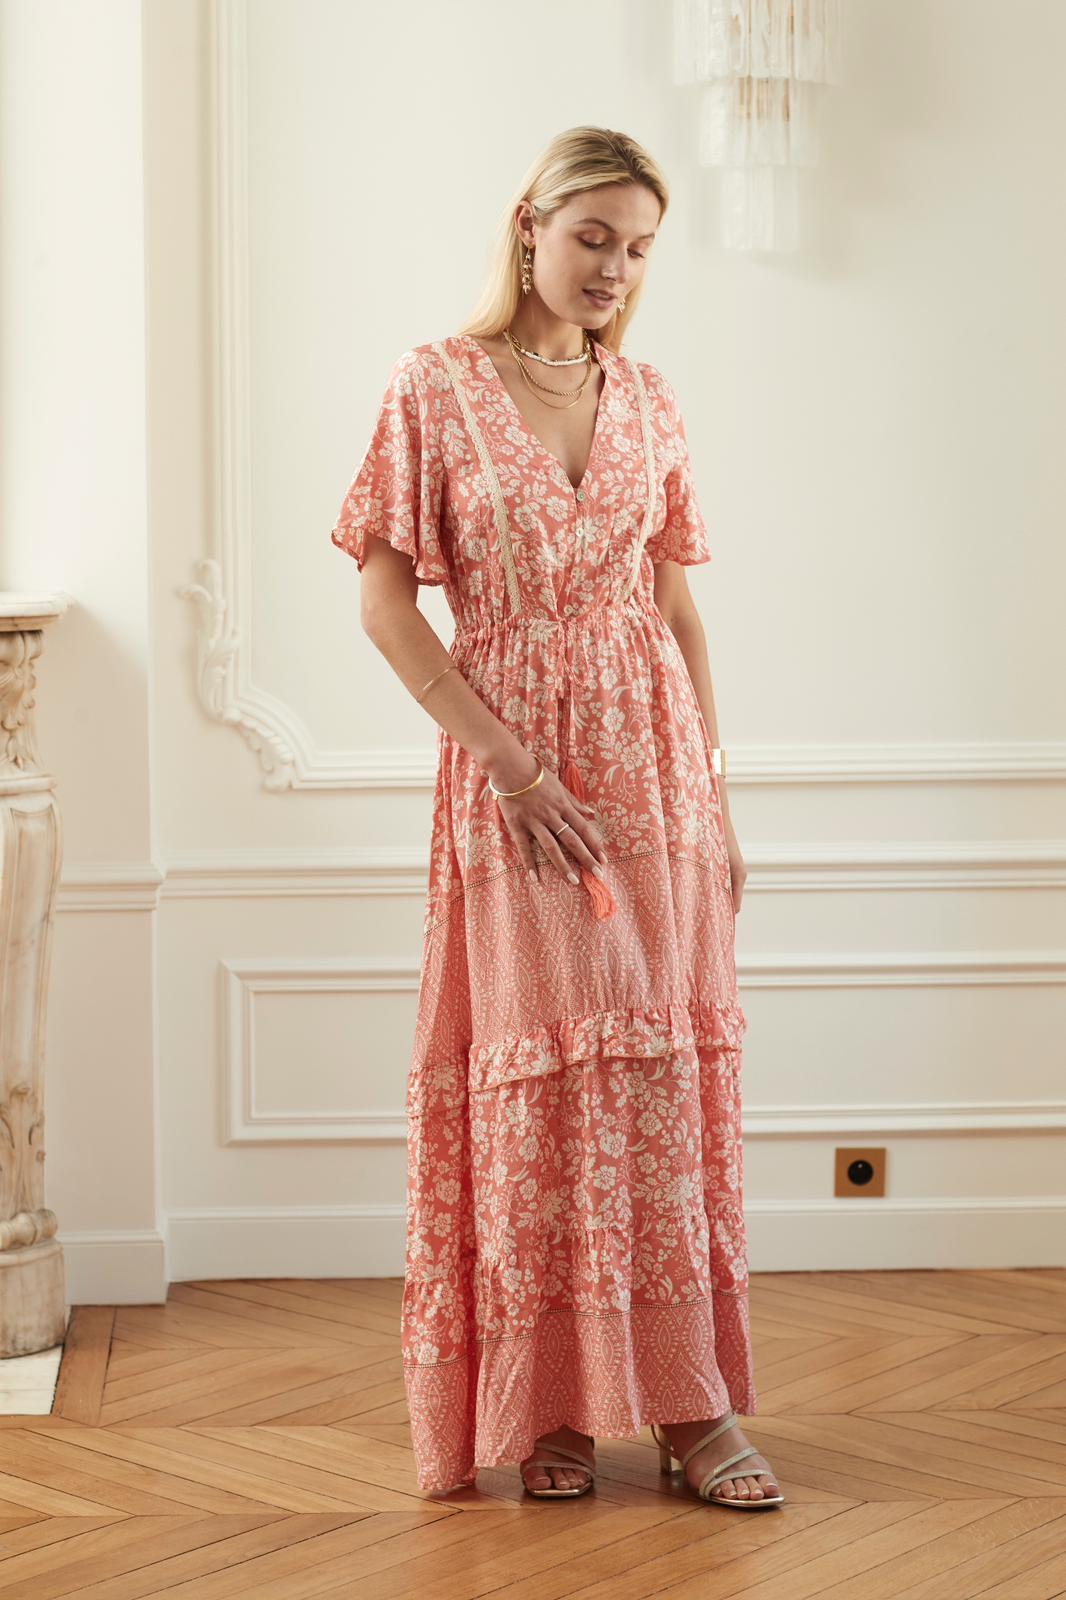 Robes longues Femme Rose EXQUISS'S Paris NE003.RO #c Efashion Paris